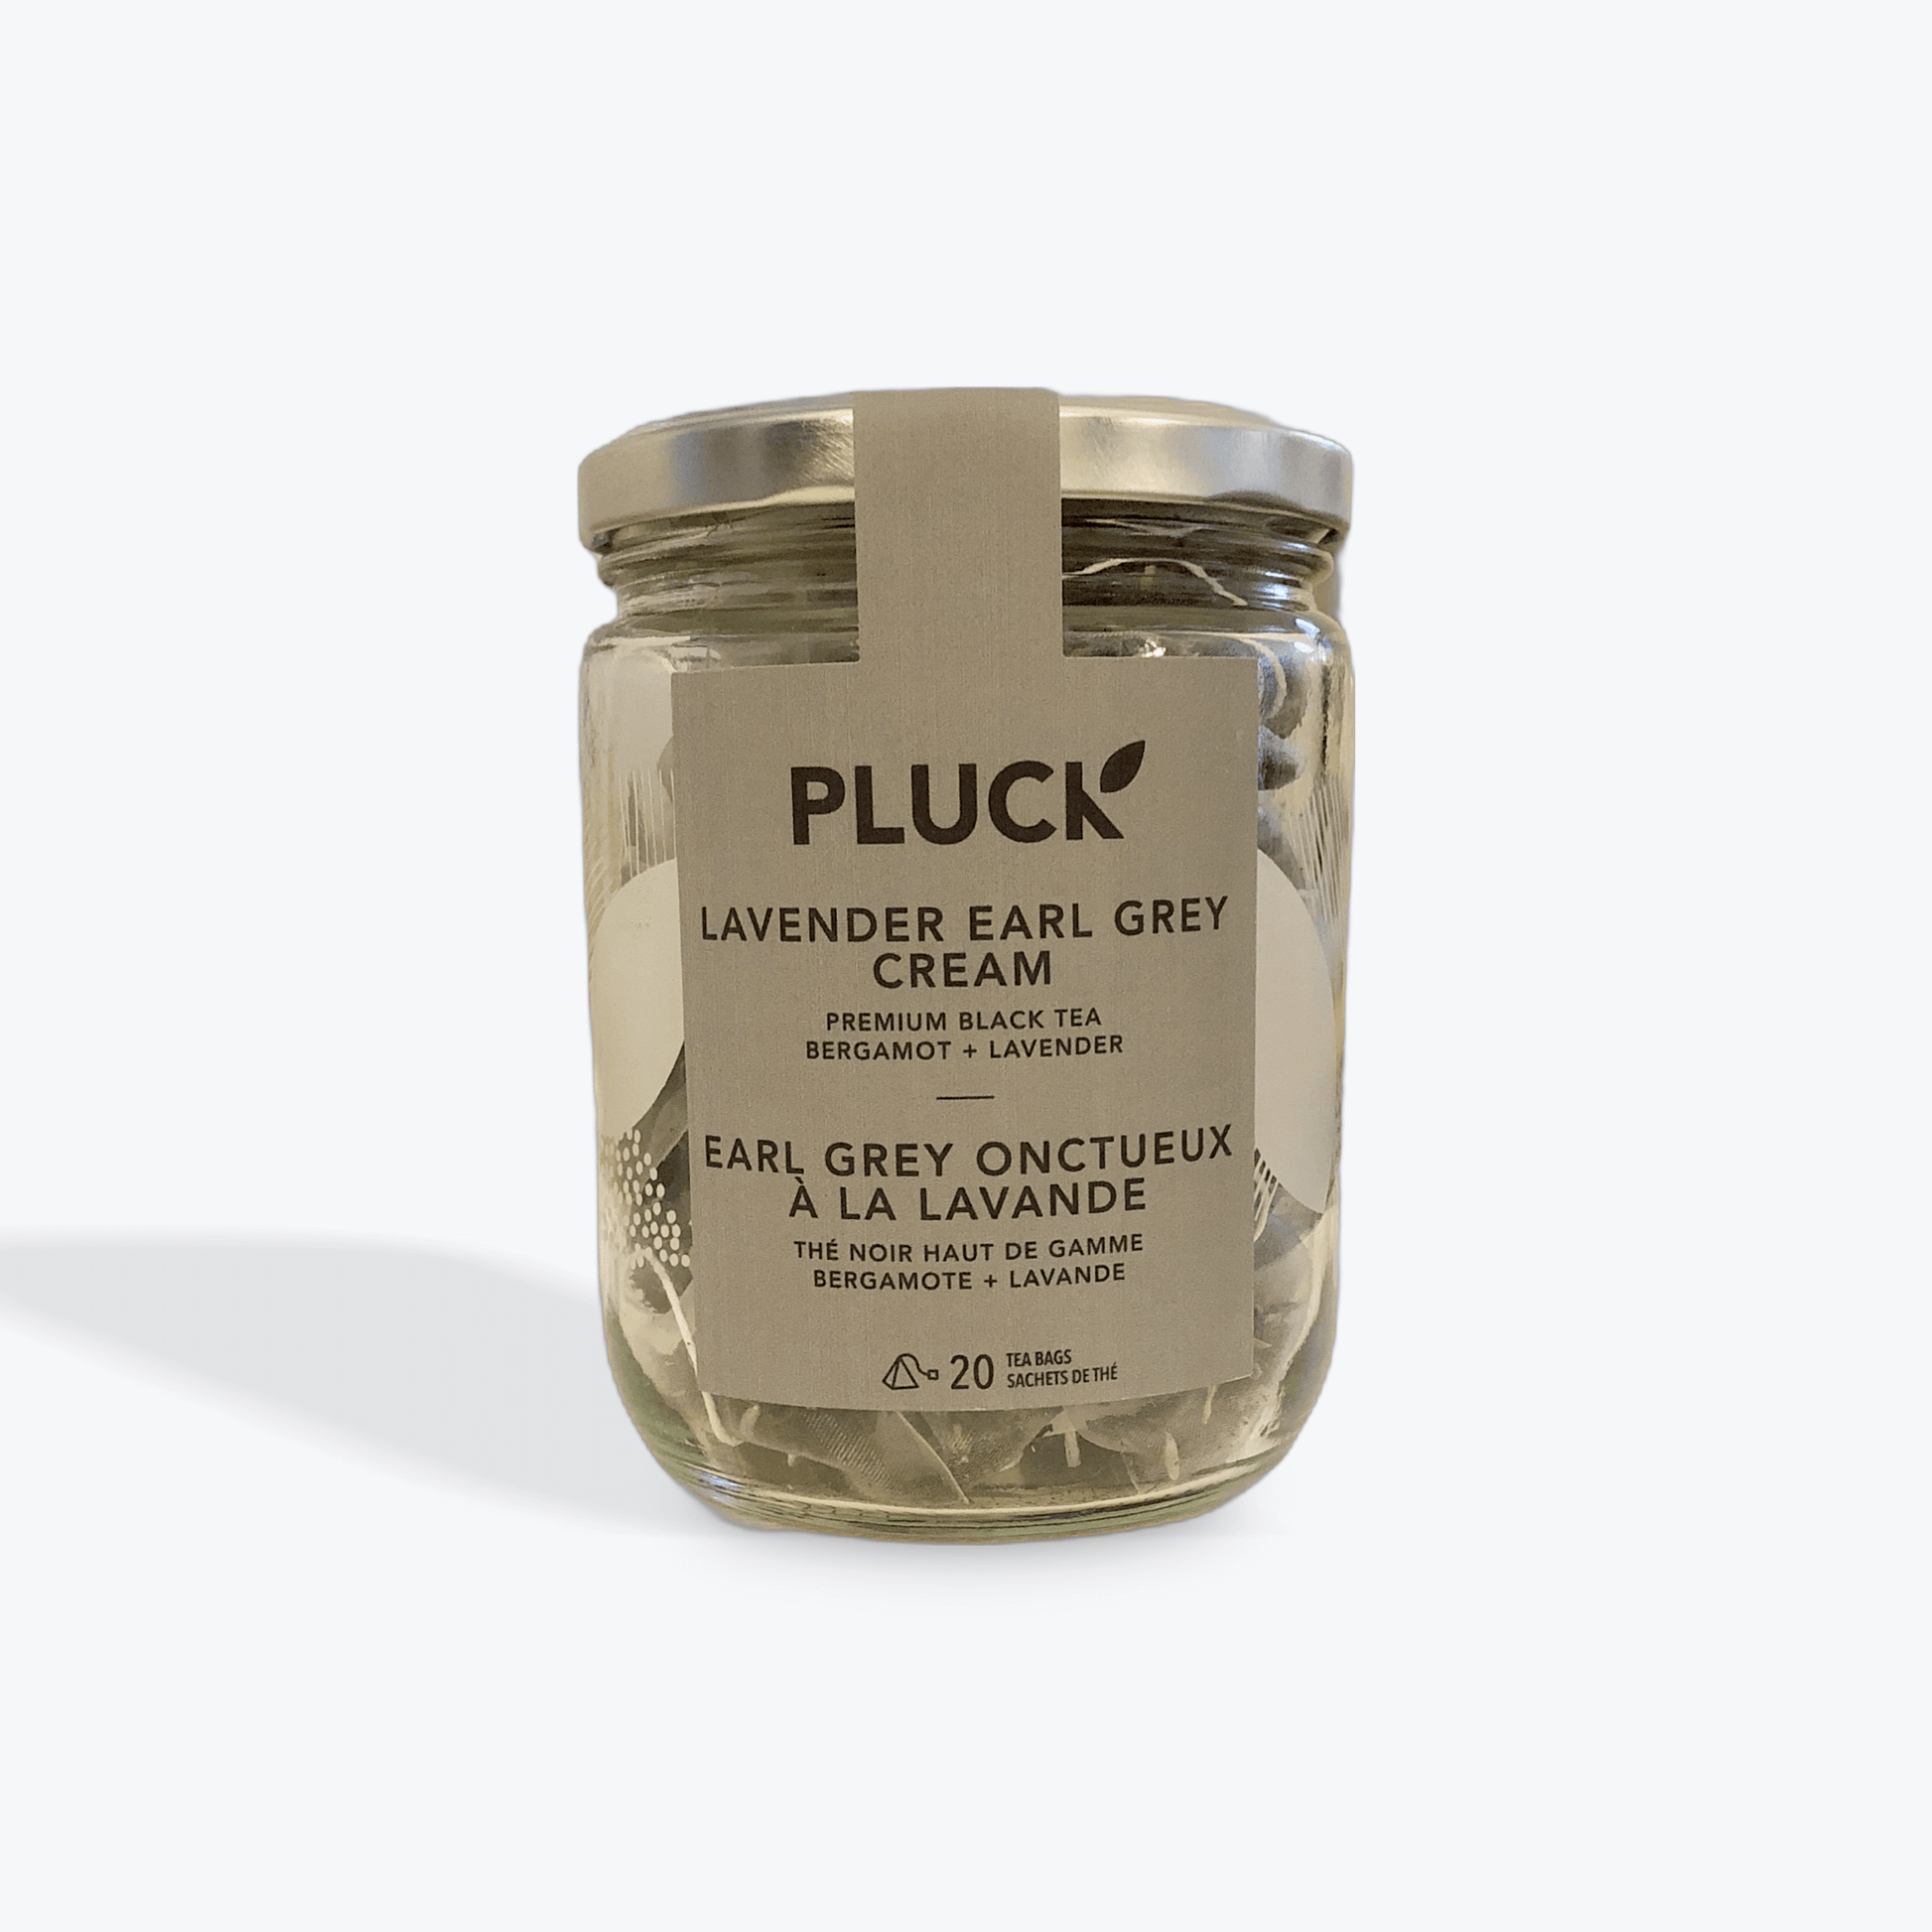 PLUCK Lavender Earl Grey Cream Tea (20 servings in glass jar), by Lou-Lou's Flower Truck